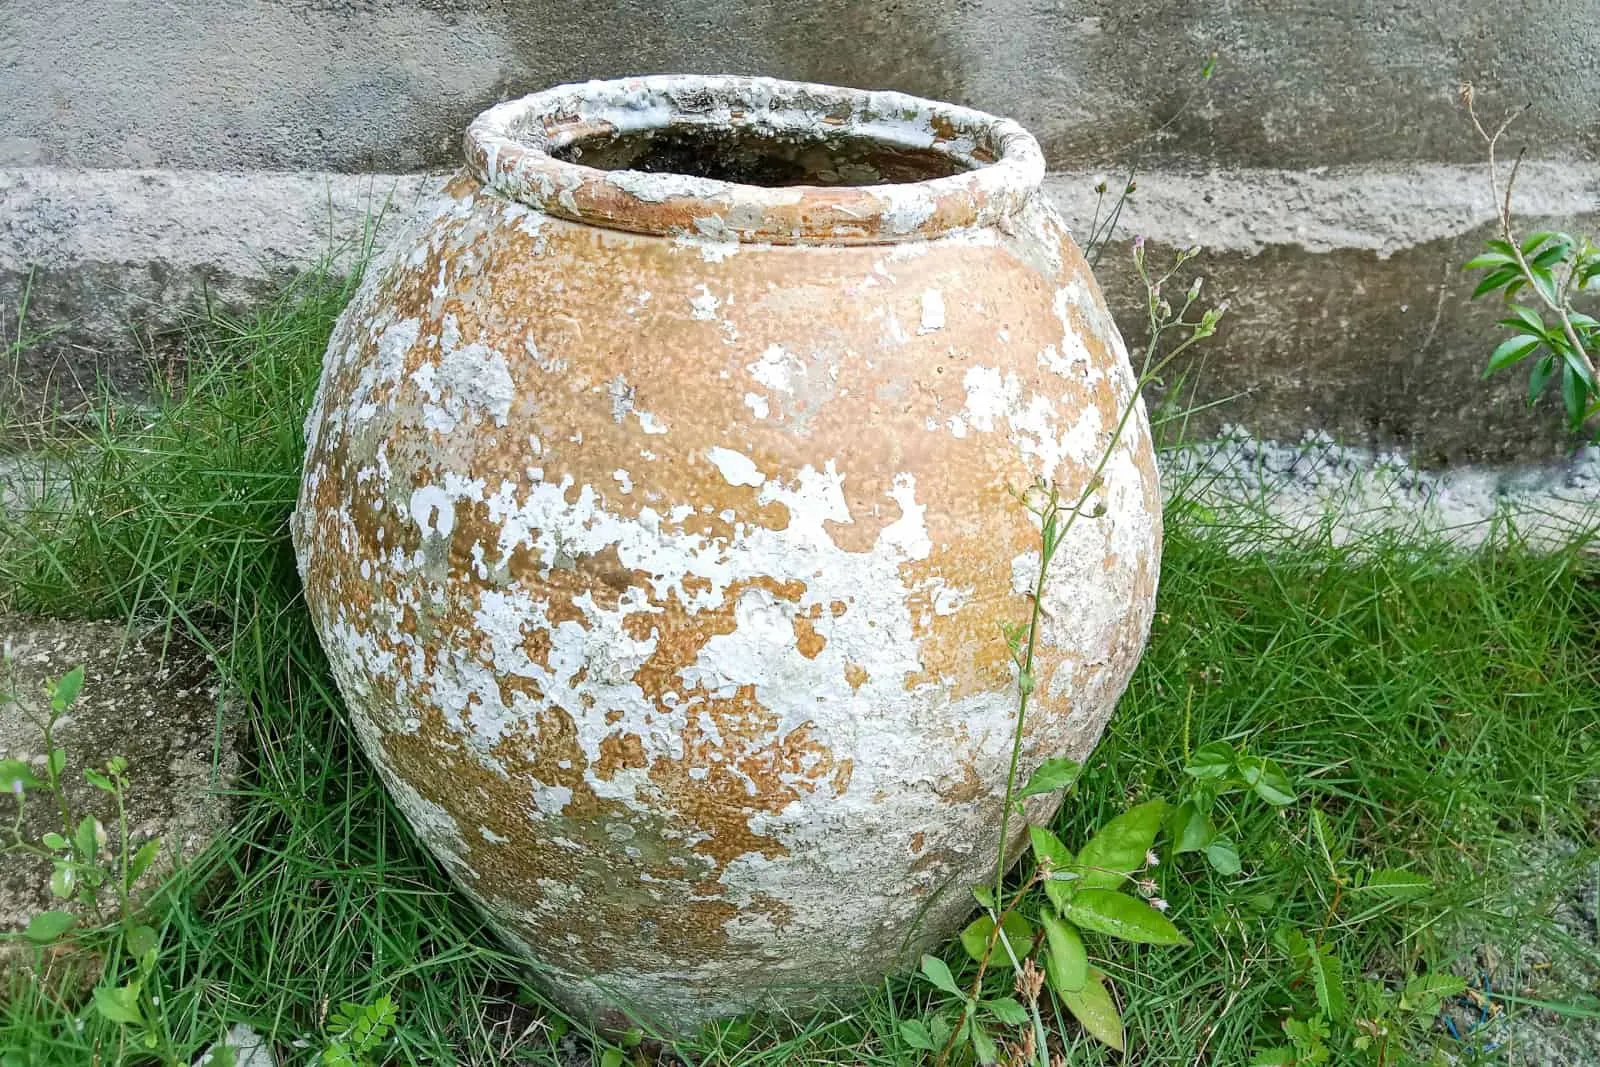 terracotta pot with crusty white film